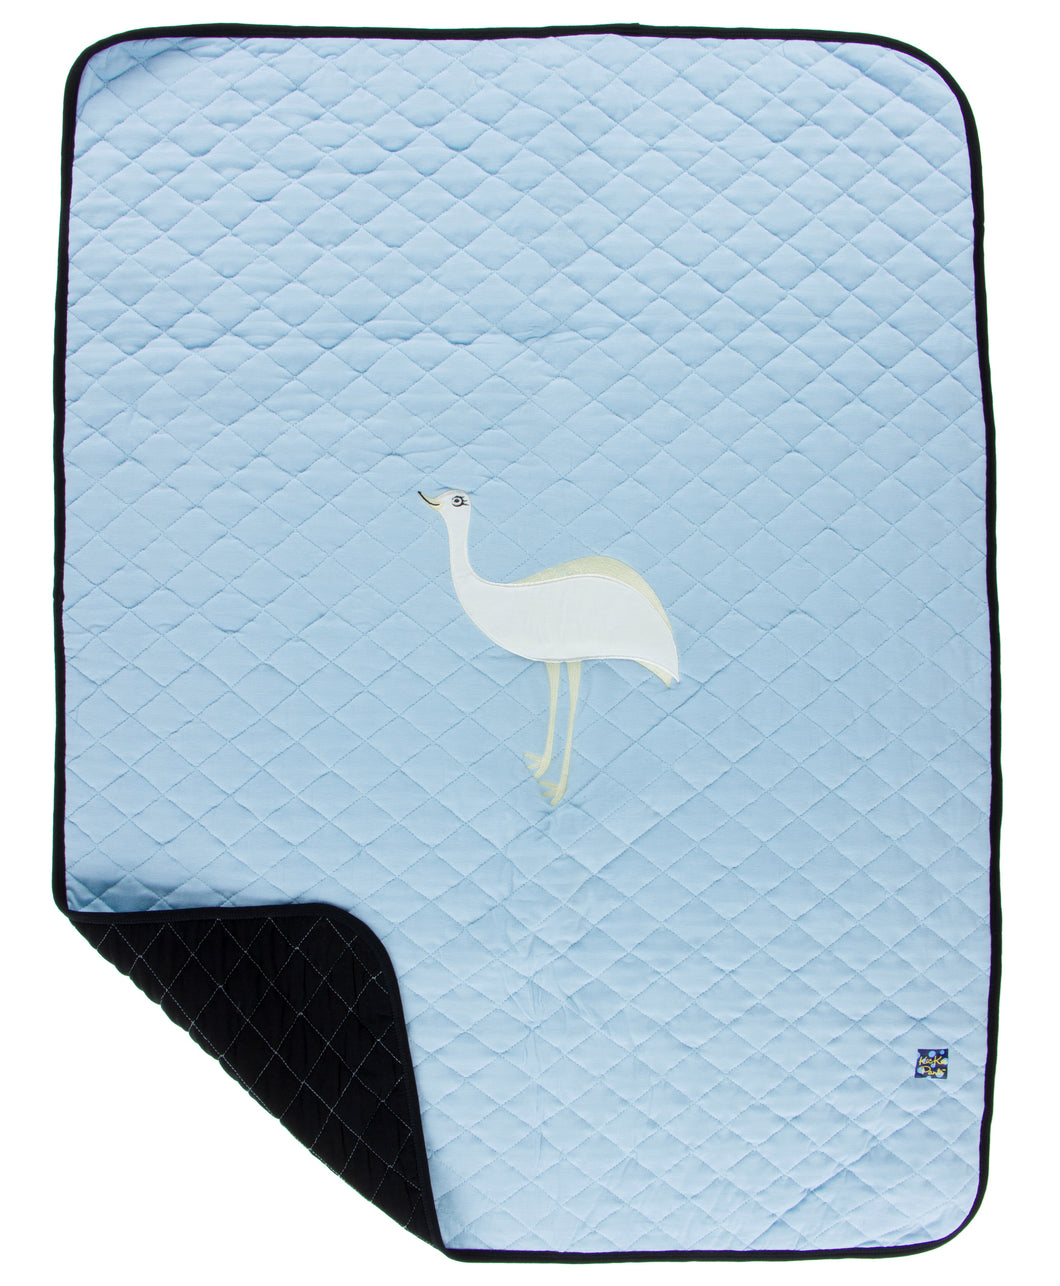 Kickee Pants Quilted Stroller Blanket W/Applique - Pond Emu